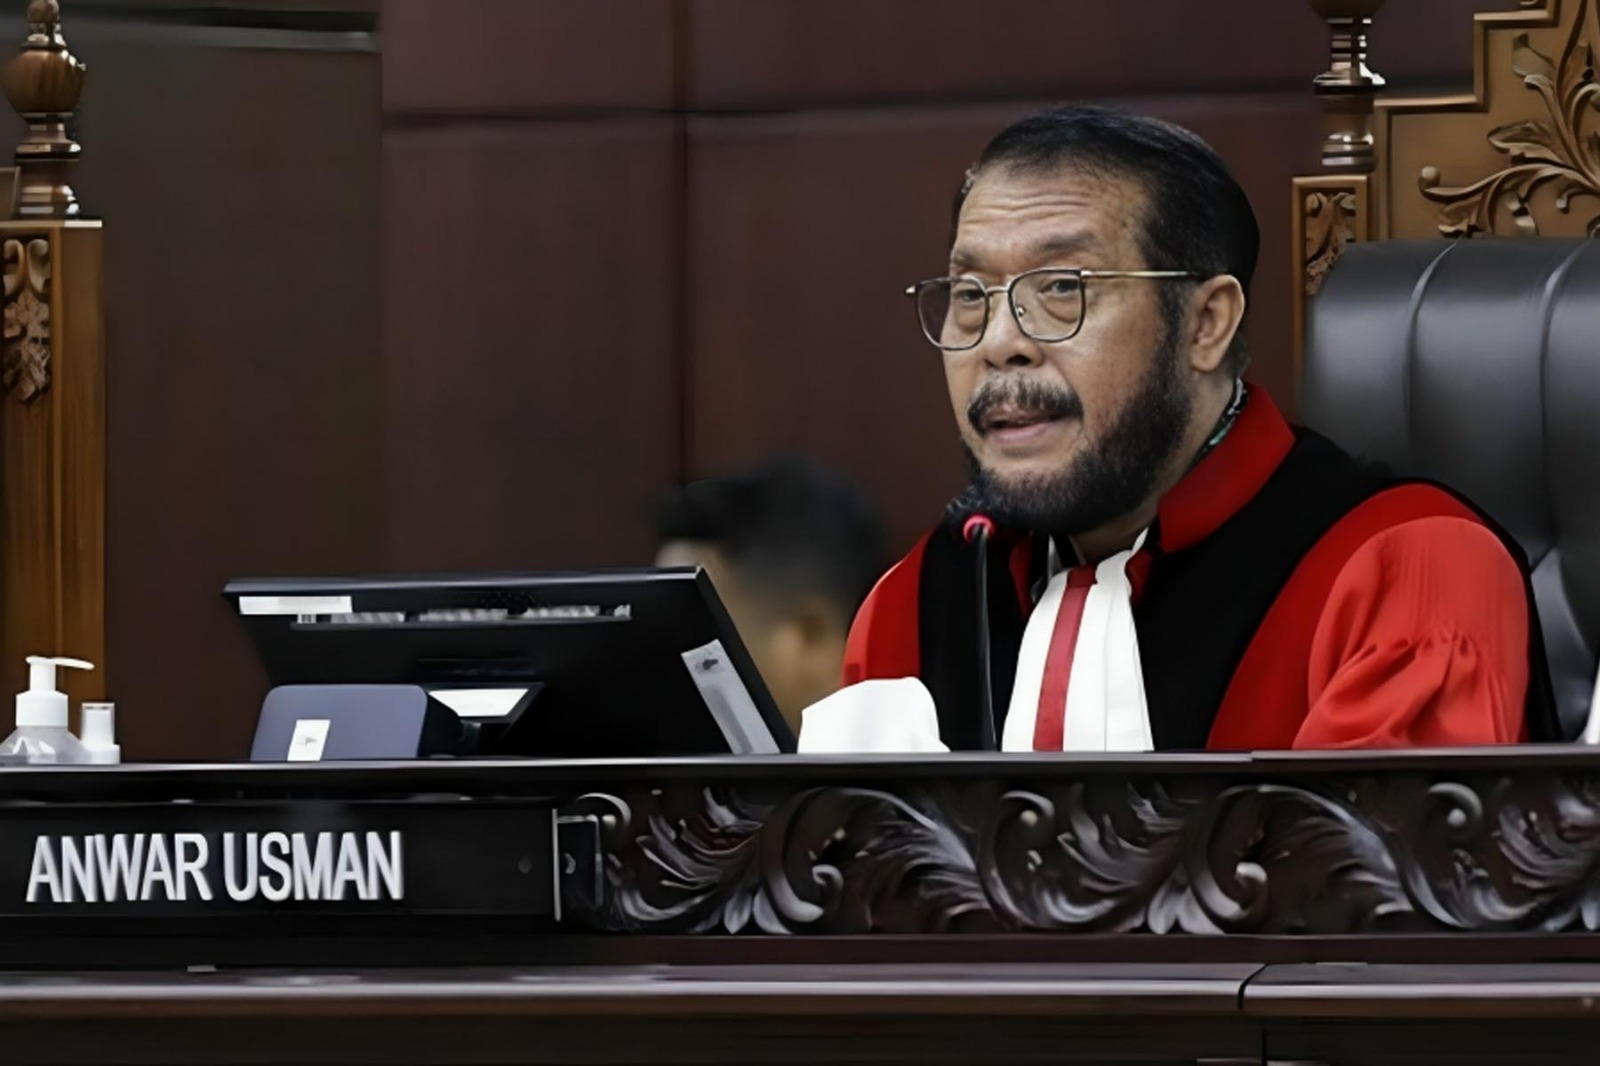 Kumhankam PB HMI Desak MKMK Kembalikan Posisi Anwar Usman Sebagai Ketua MK, Ini Alasannya